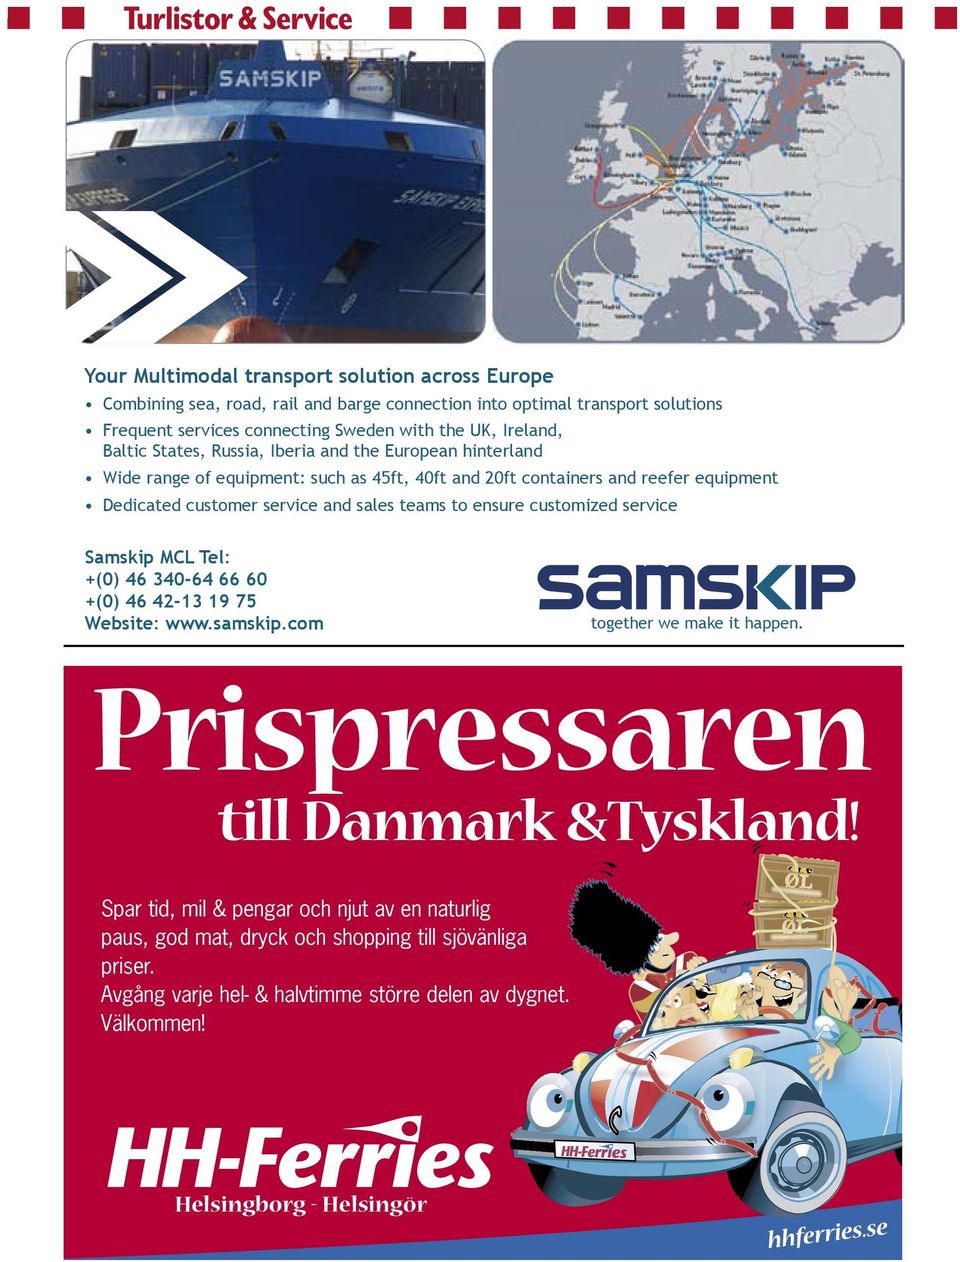 to ensure customized service Samskip MCL Tel: +(0) 46 340-64 66 60 +(0) 46 42-13 19 75 Website: www.samskip.com together we make it happen. Prispressaren till Danmark &Tyskland!